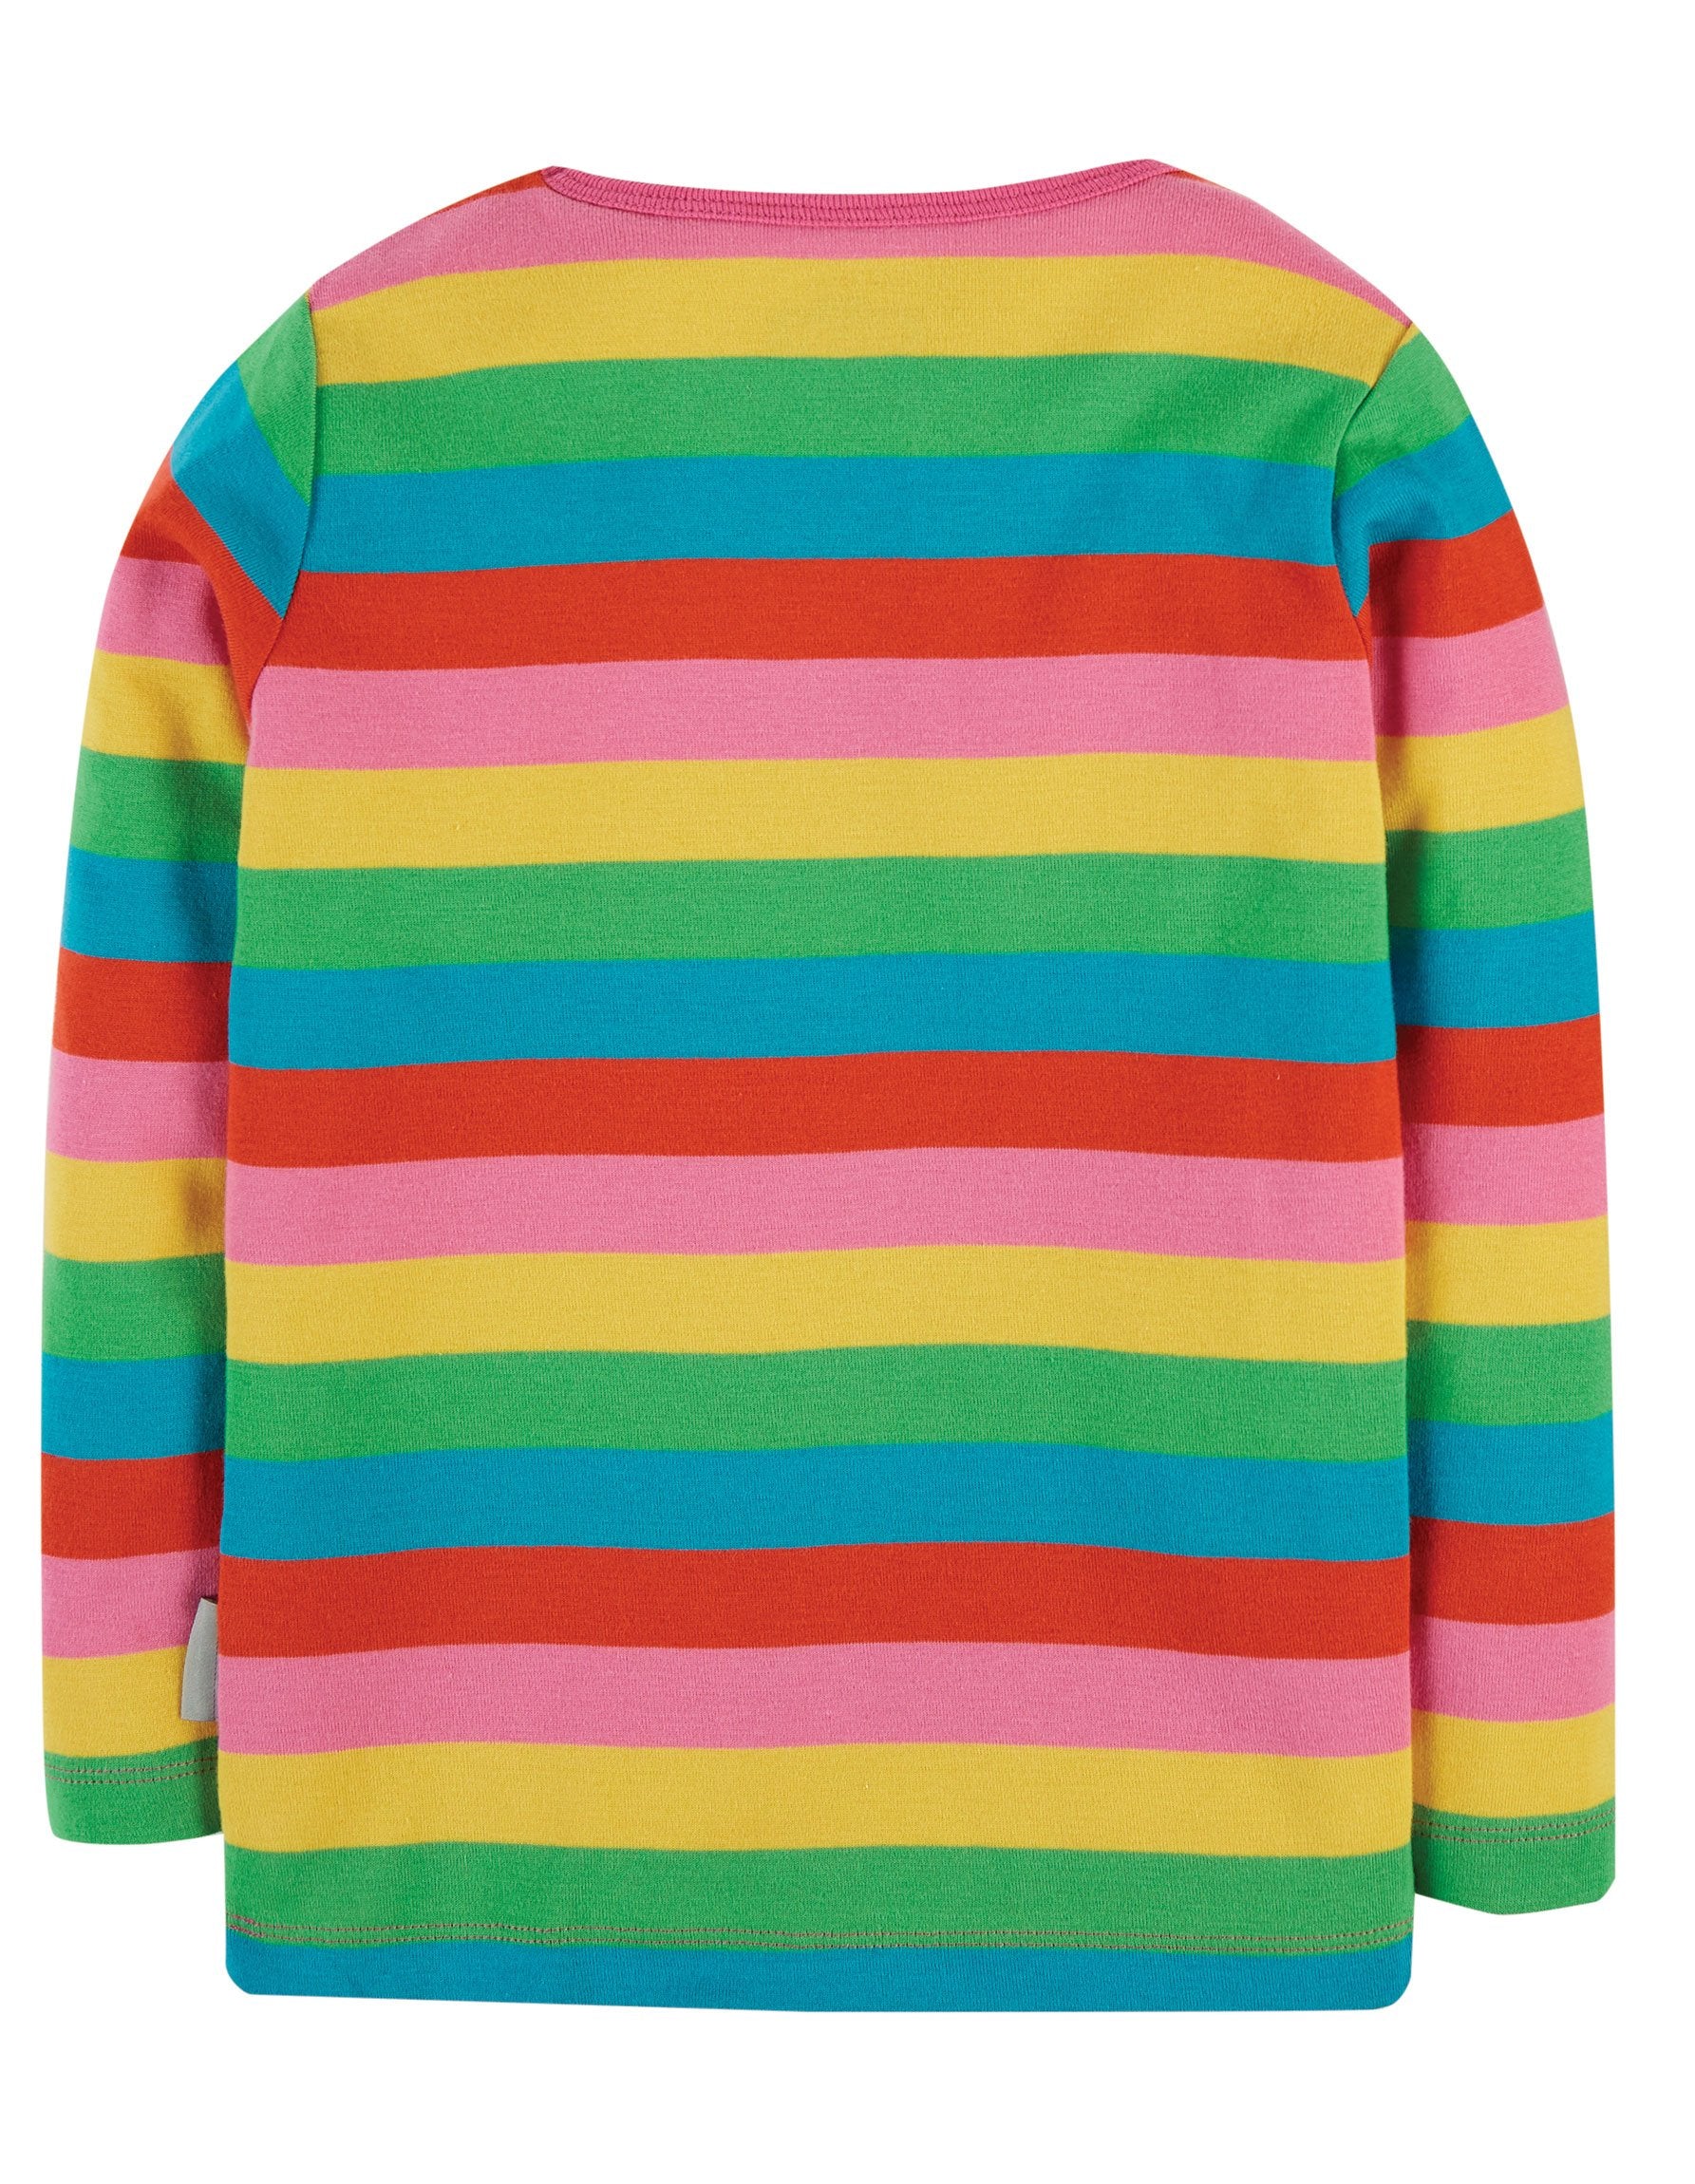 New Release Frugi Favourite Long Sleeve T-Shirt Foxglove Rainbow Stripe - The Thrifty Stork